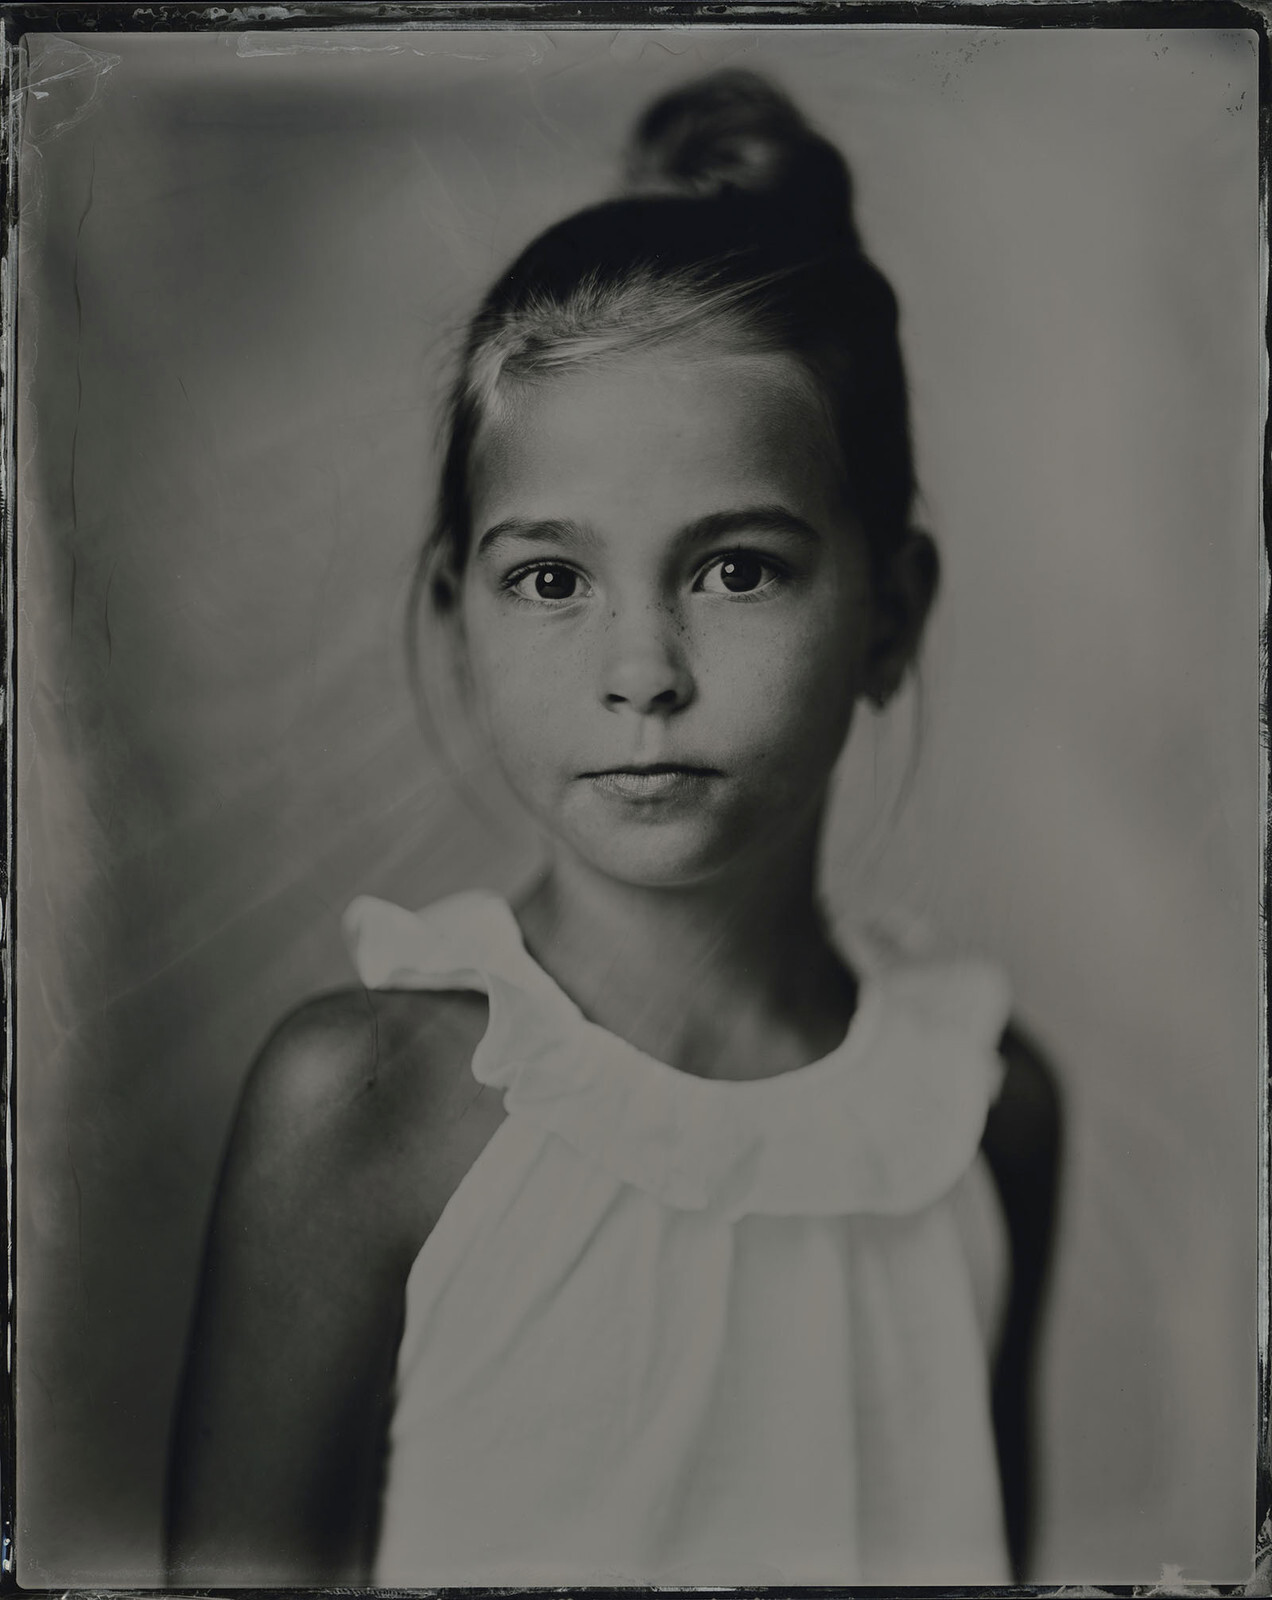 Lotta-Silver Portrait Store-Wet plate collodion-Tintype 20 x 25 cm.